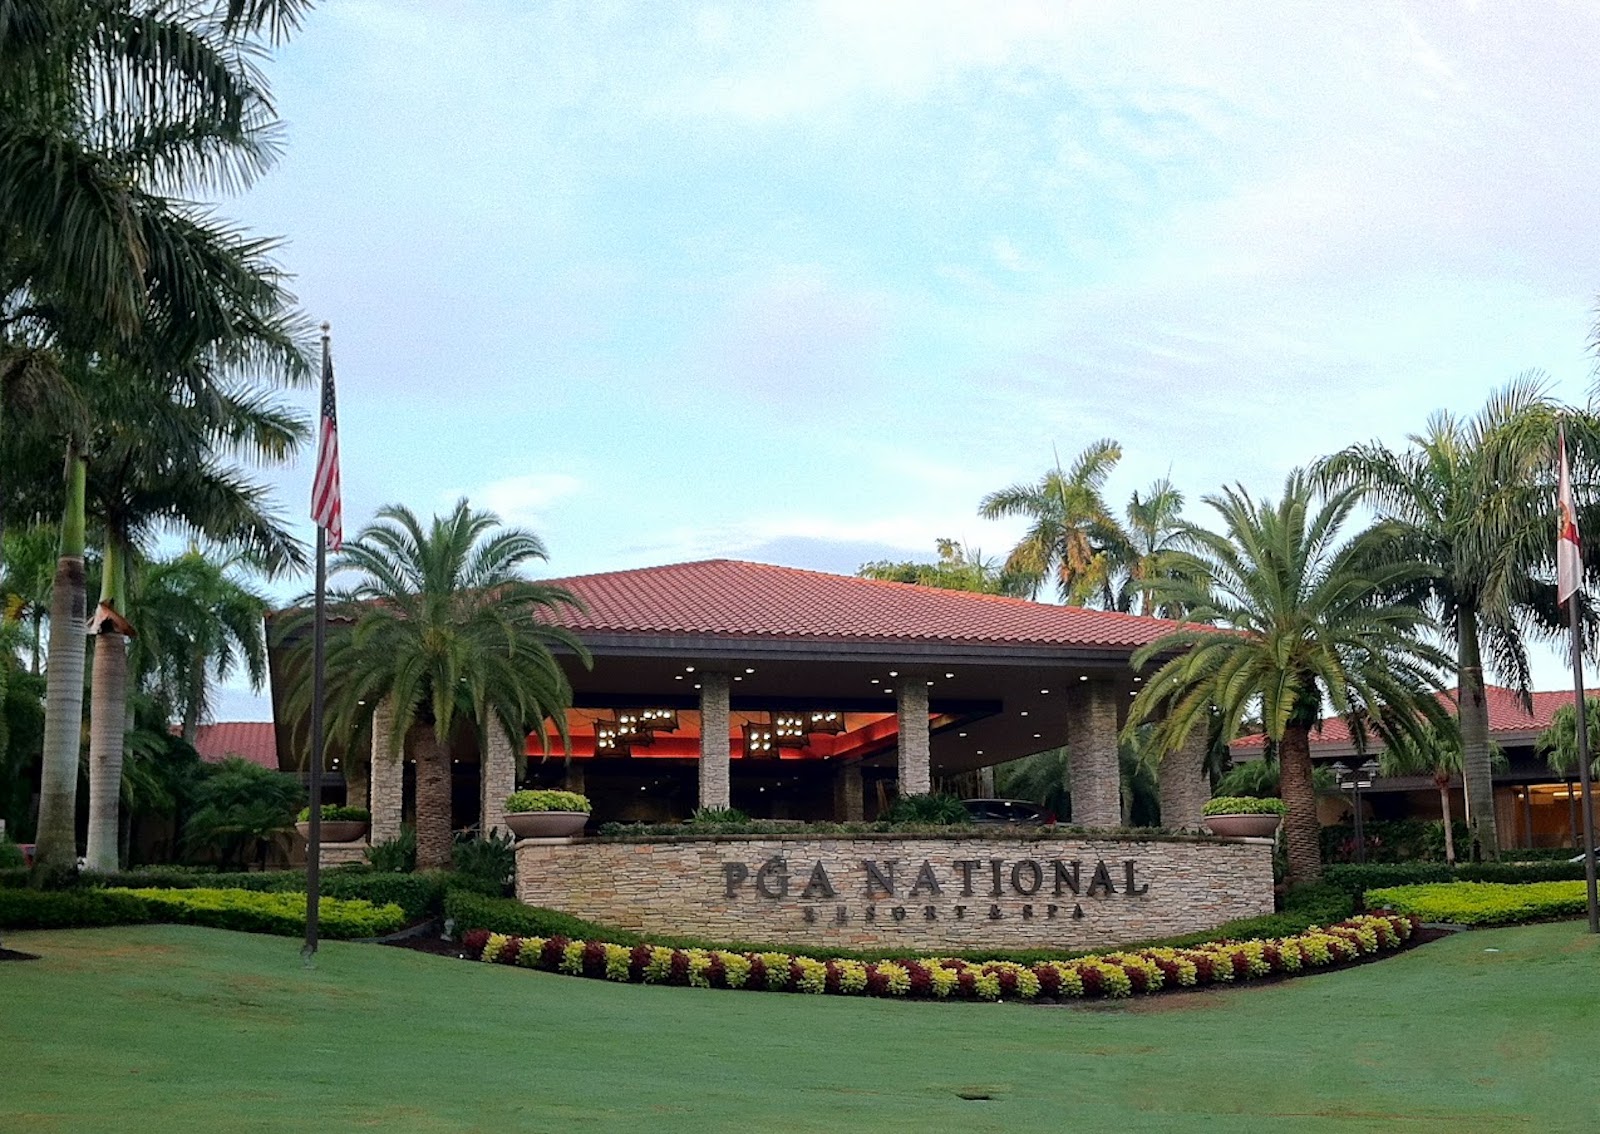 PGA National Golf Club - Florida